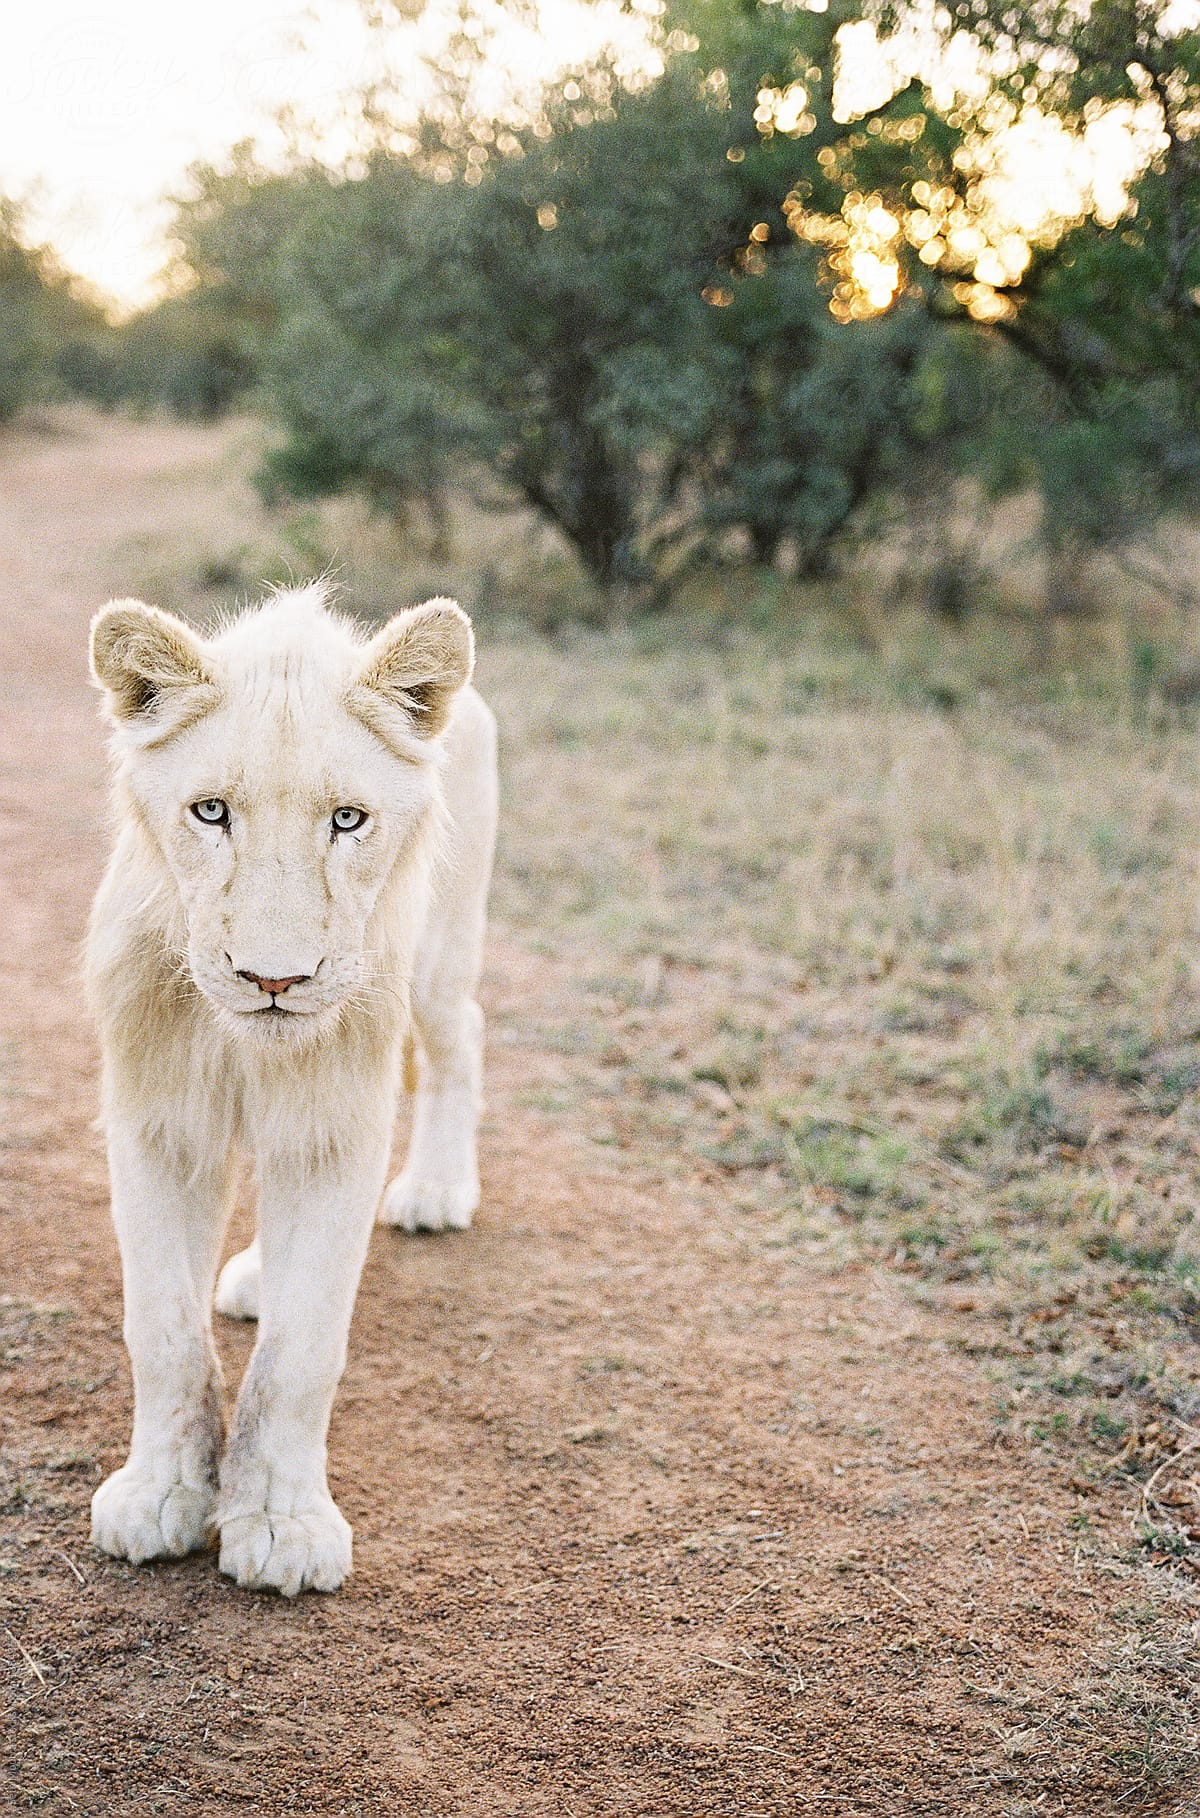 Michael the white lion